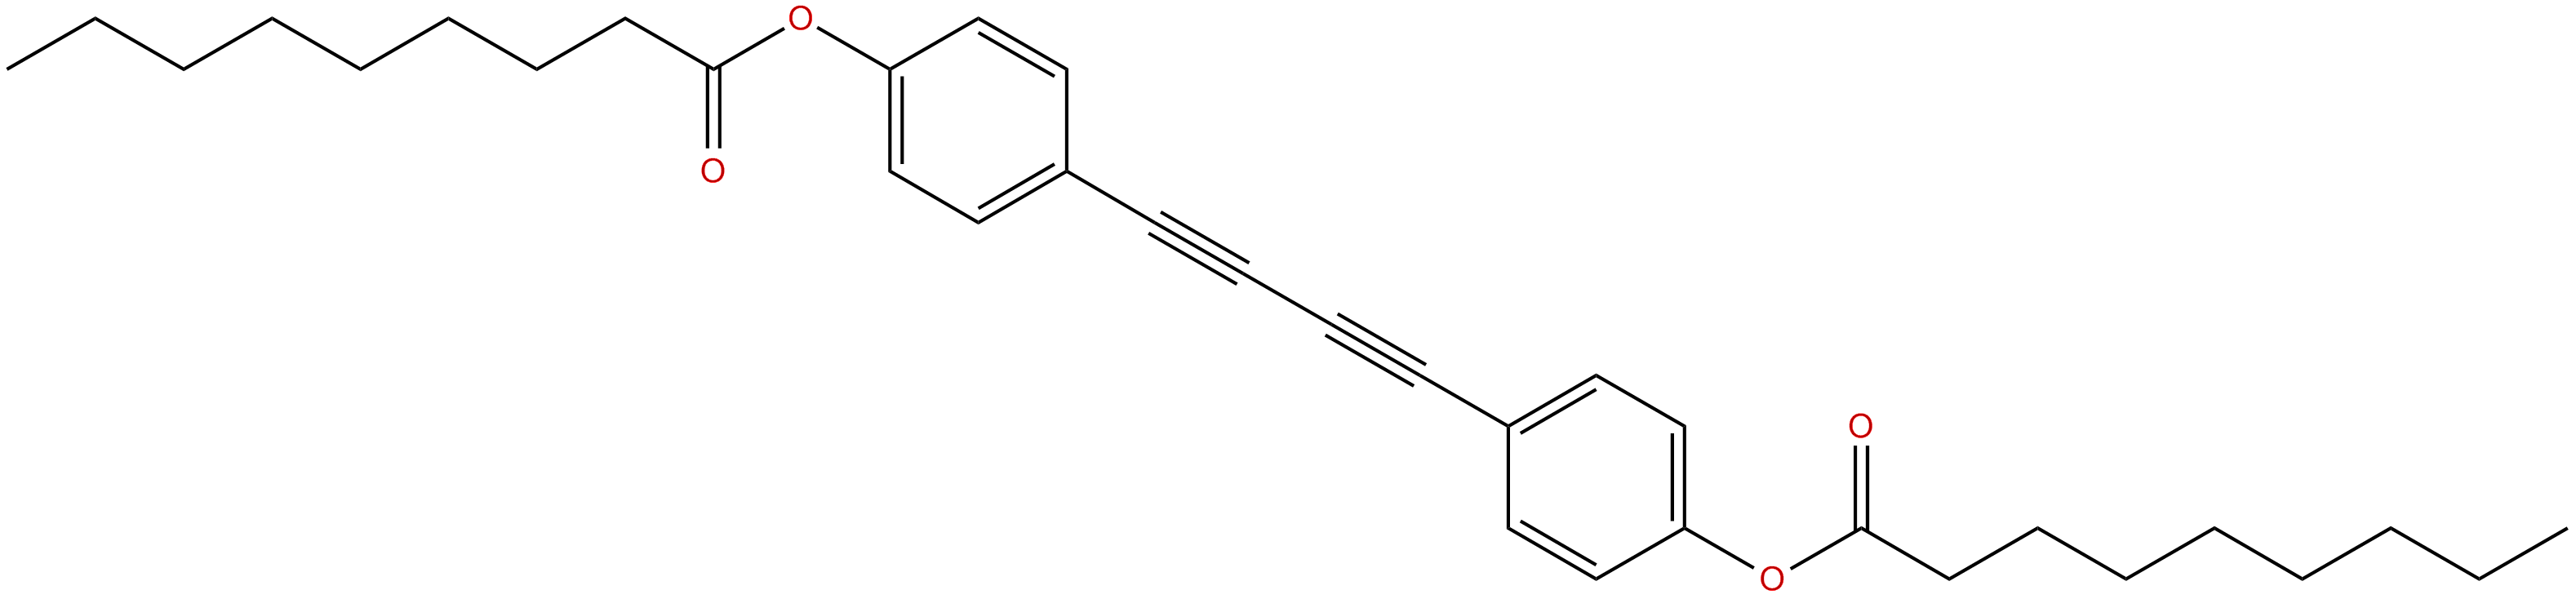 Image of 4,4'-(1,3-butadiynl-1,4-diyl)bis(4,1-phenylenenonanoate)